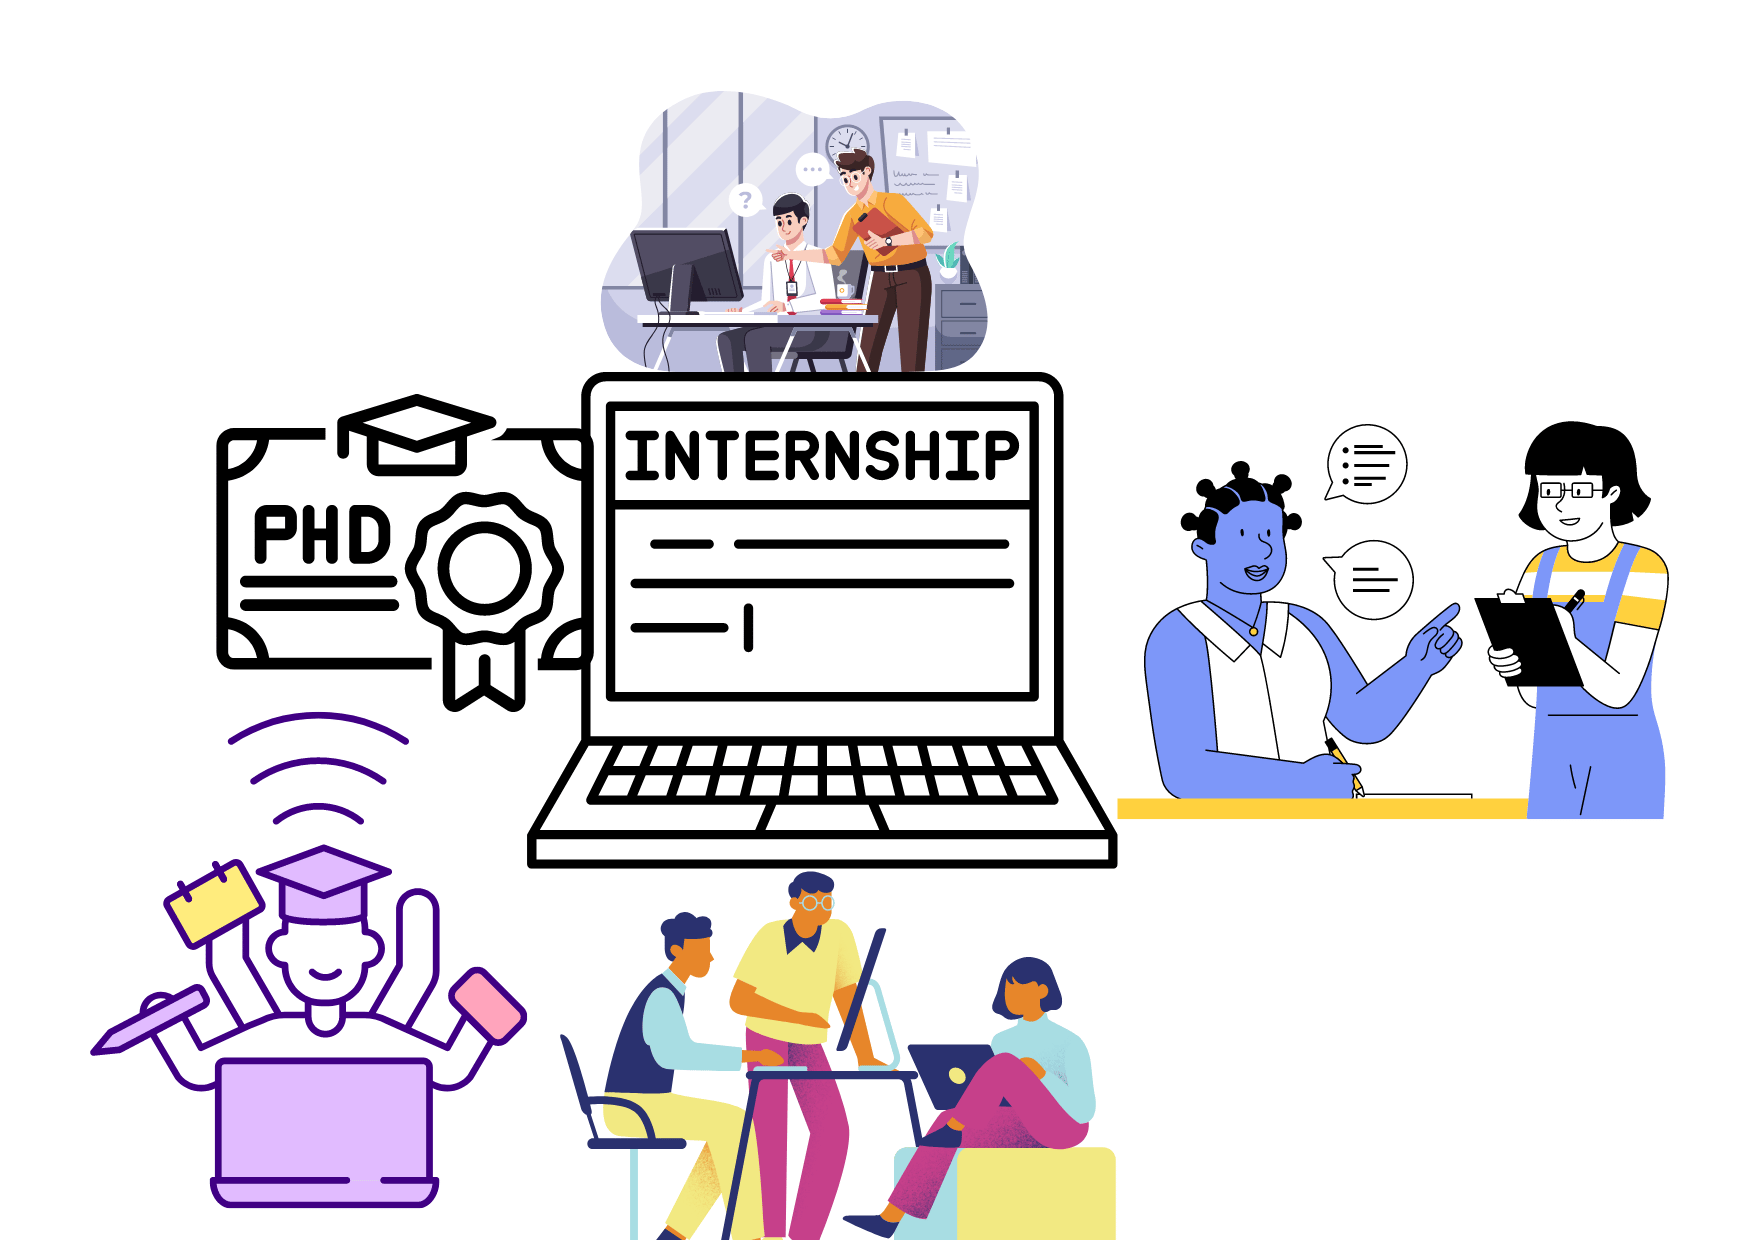 economic phd internship